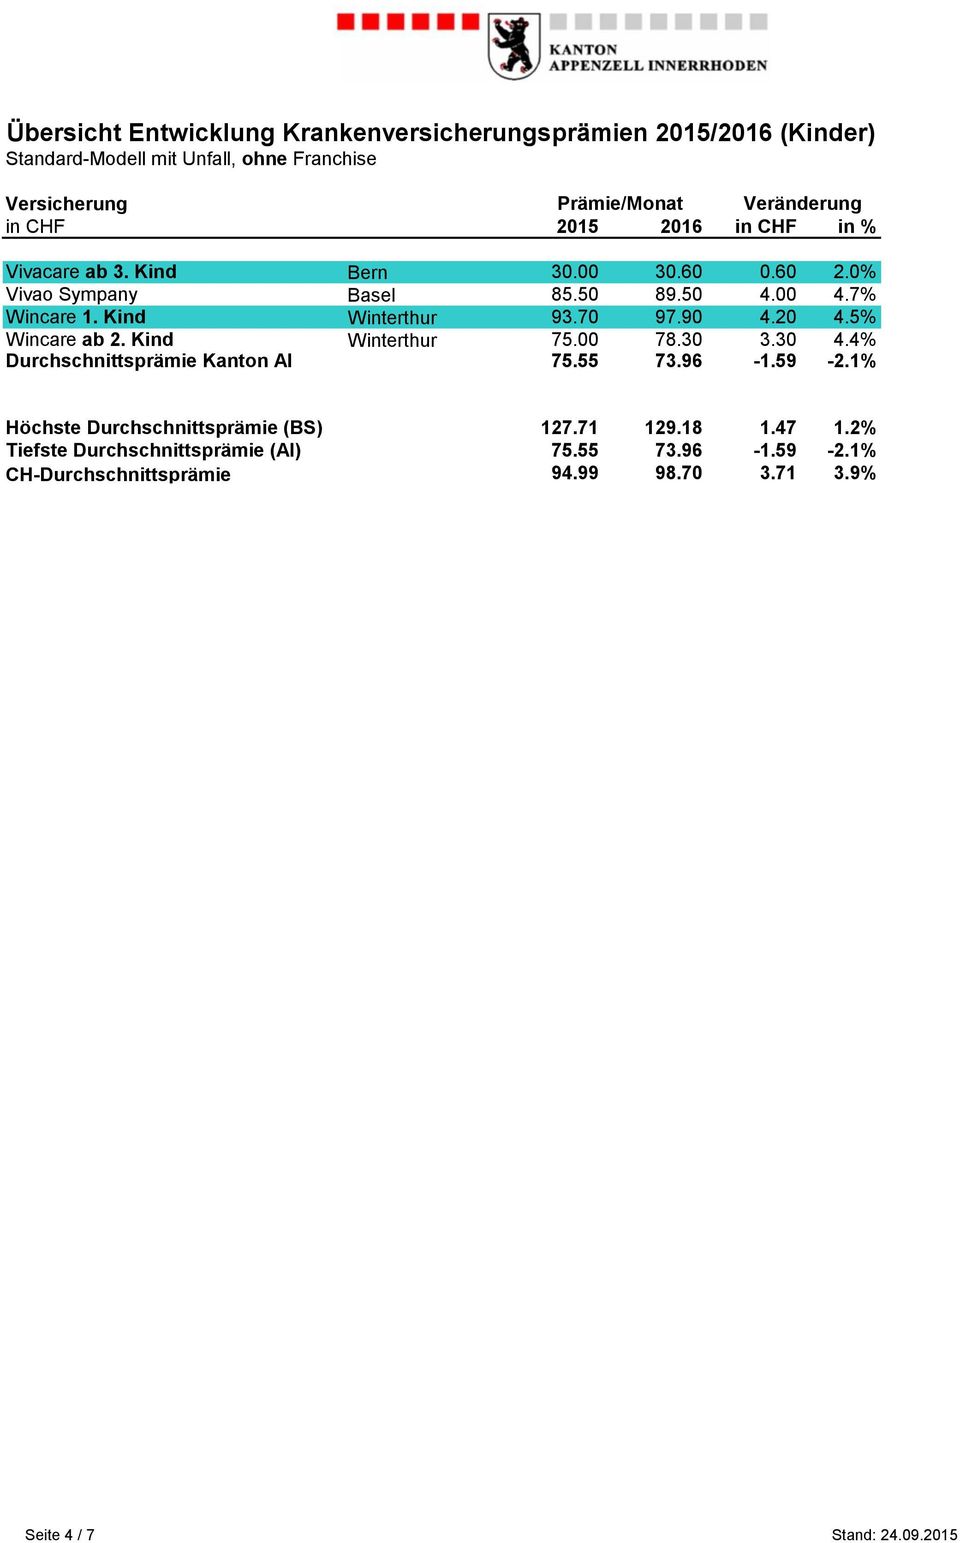 5% Wincare ab 2. Kind Winterthur 75.00 78.30 3.30 4.4% Durchschnittsprämie Kanton AI 75.55 73.96-1.59-2.